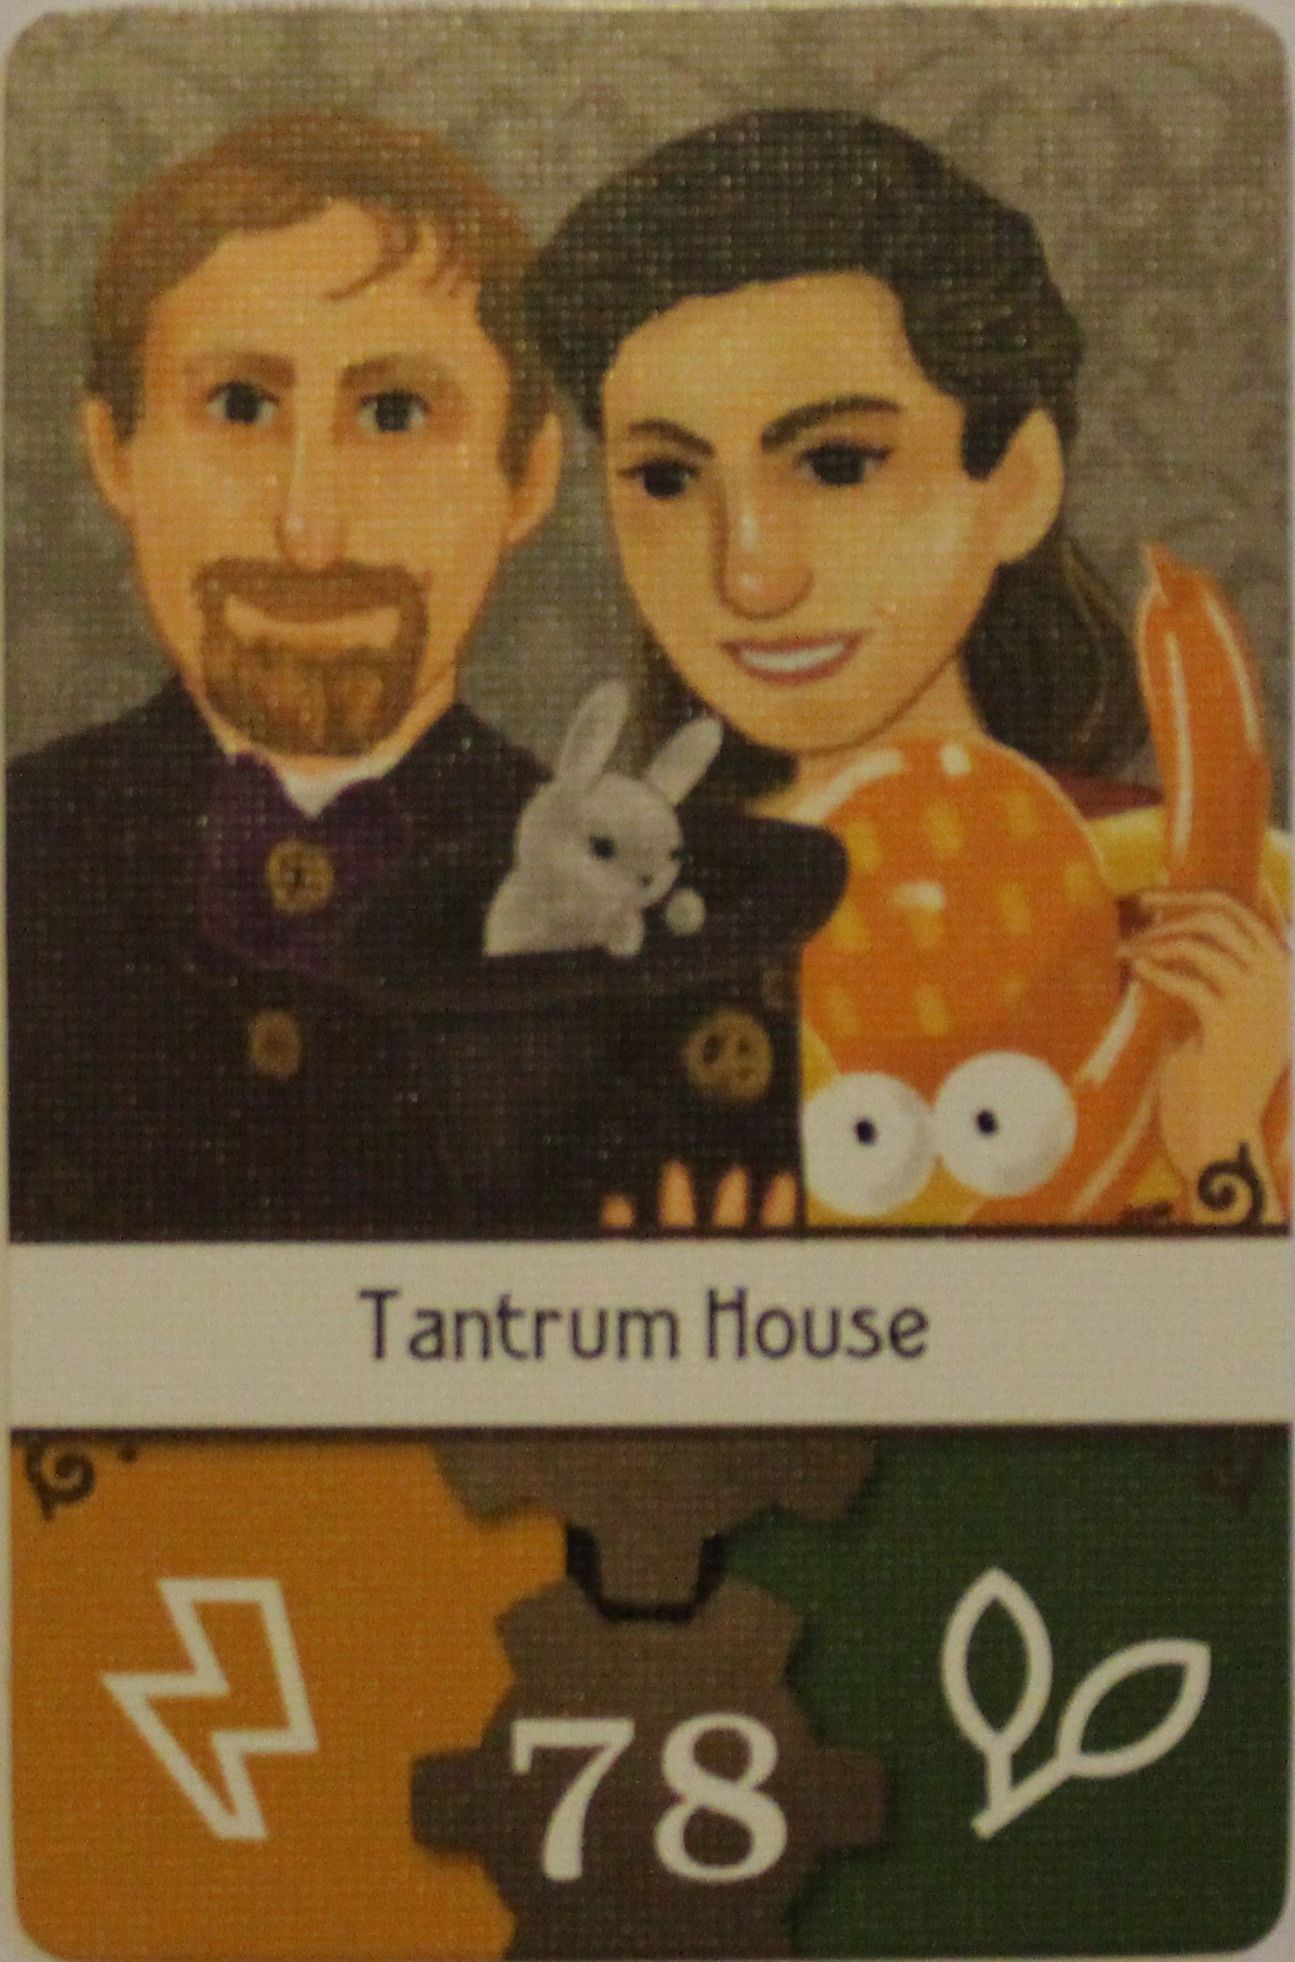 Lovelace & Babbage: Tantrum House 2019 Promo Card